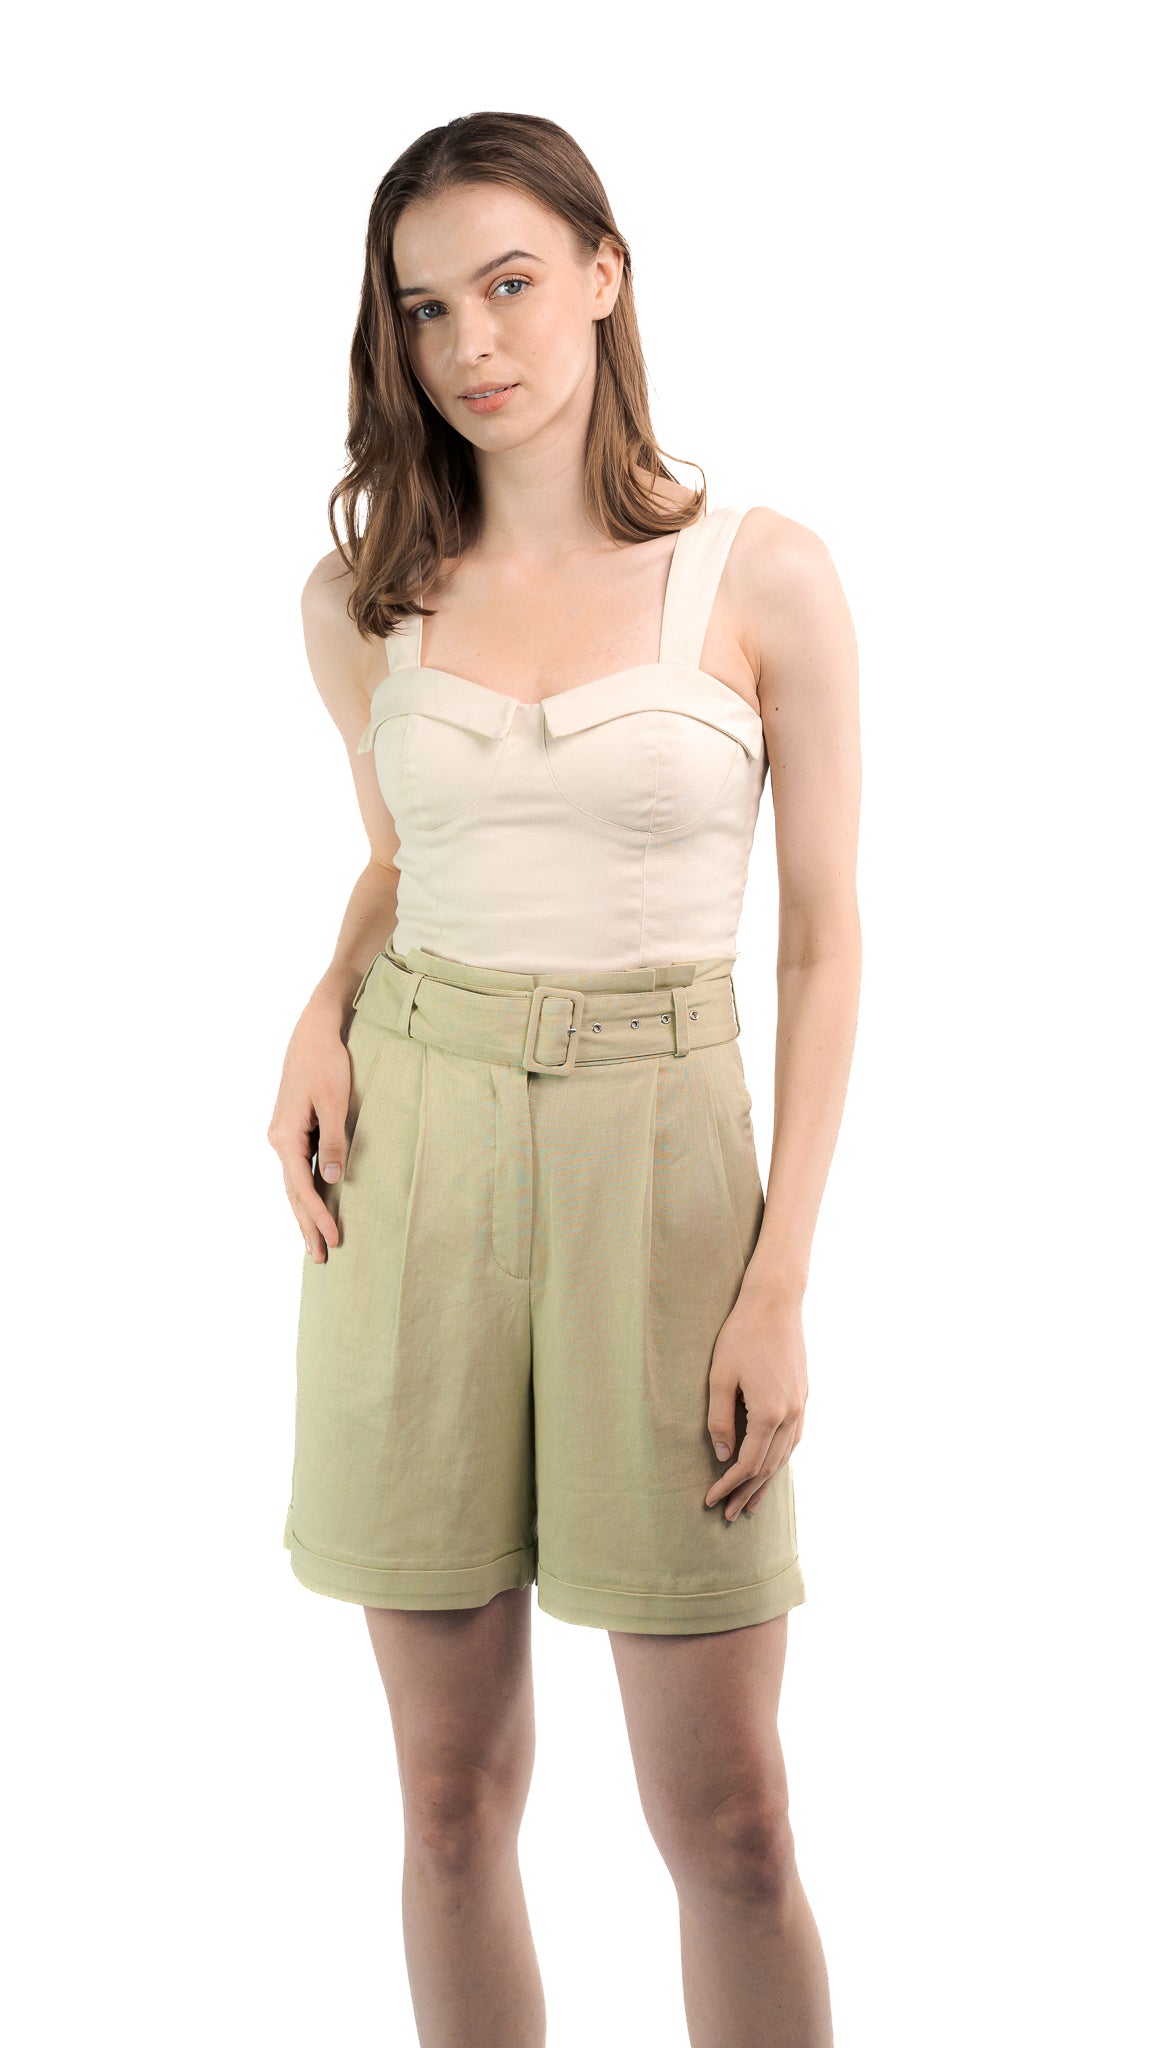 Women's Shorts Summer Casual Dressy Short with Belt and Pockets, Linen Blend